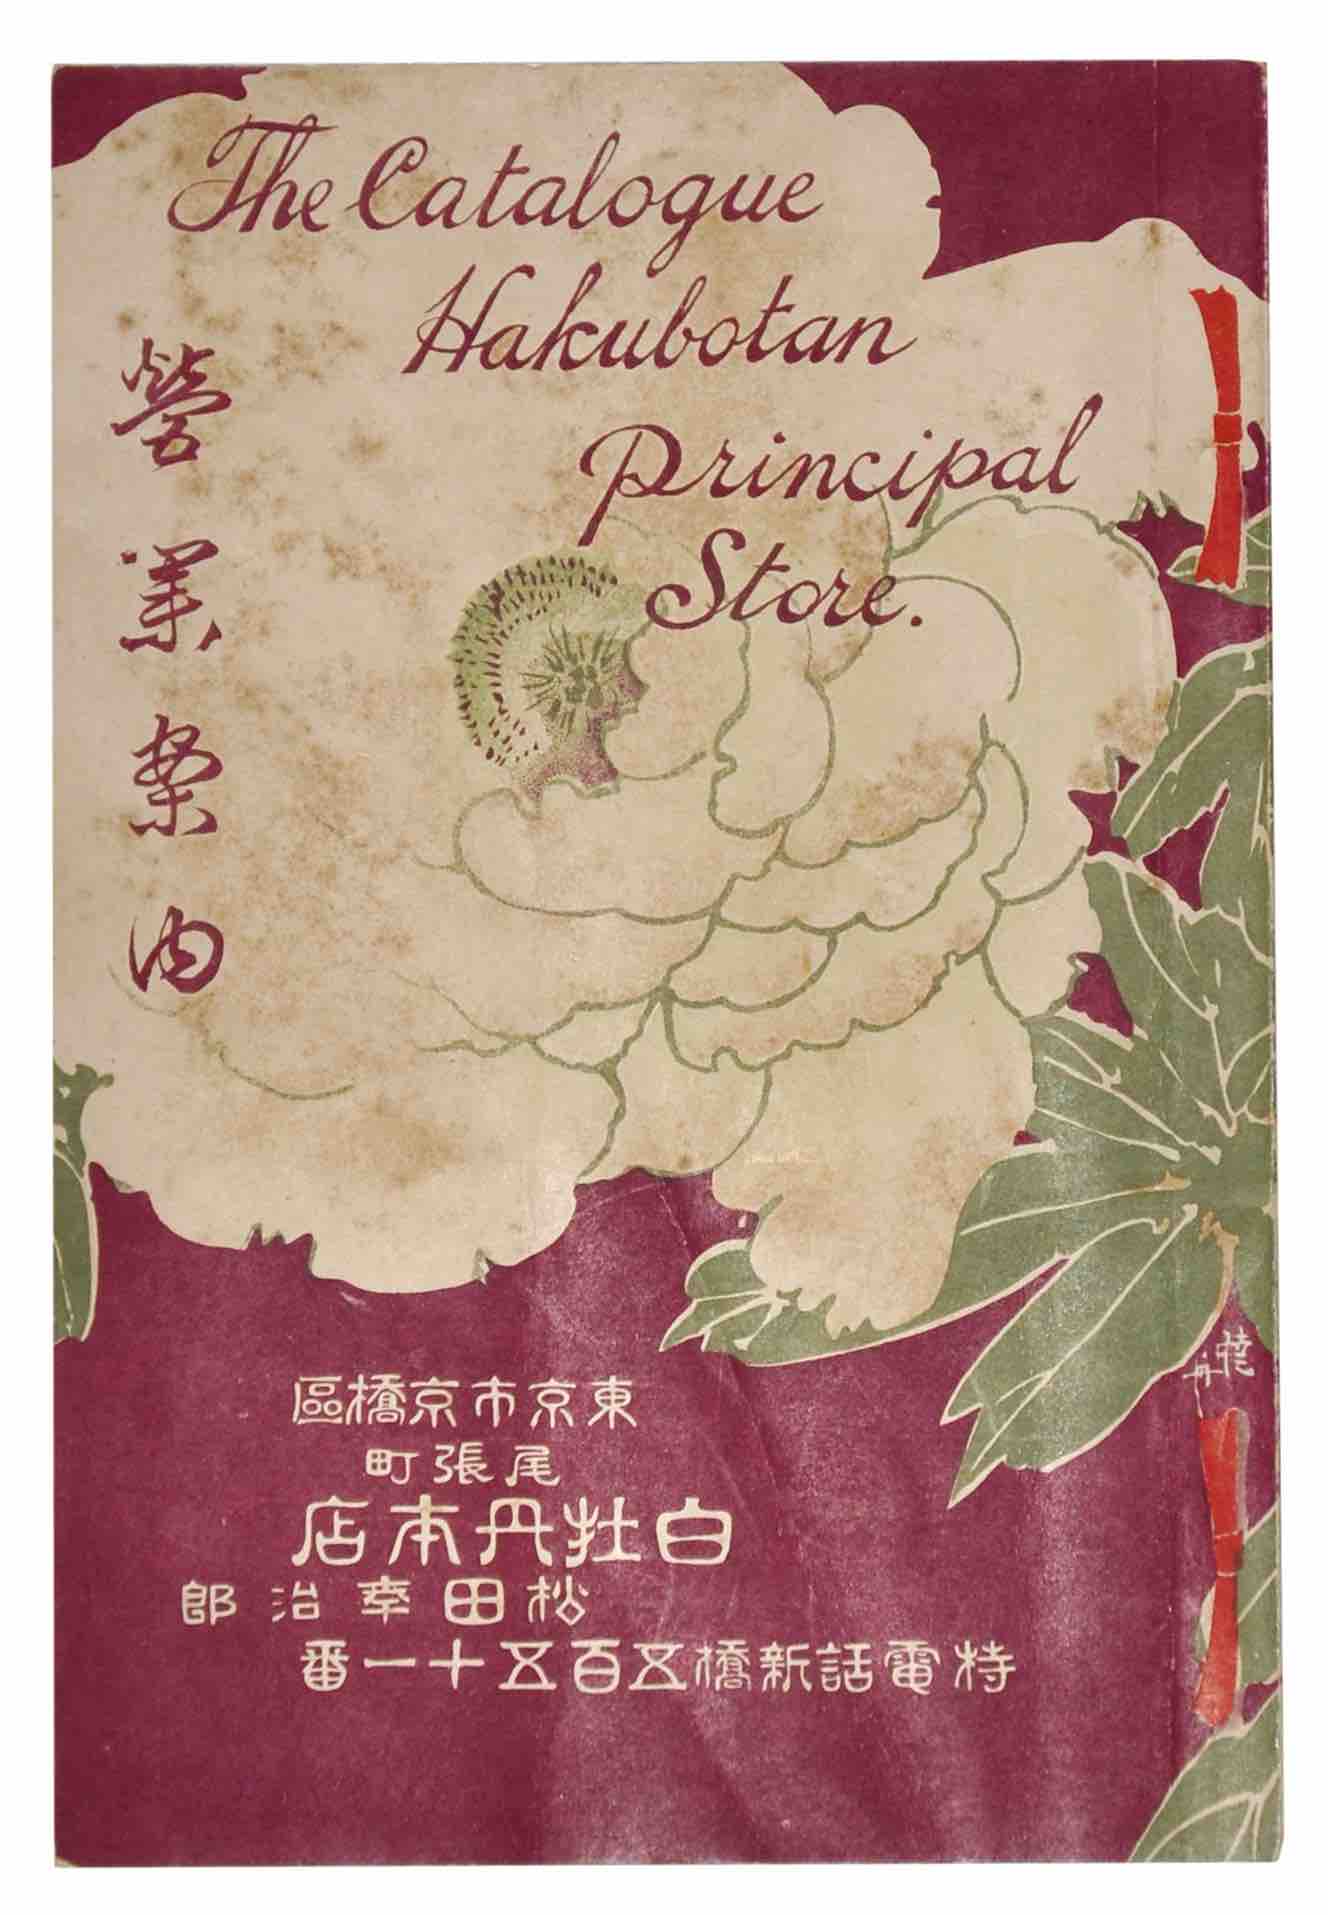 [HAKUBOTAN]. - The Catalogue Hakubotan Principal Store. Tokyo (Kyobashi) ca 1910.